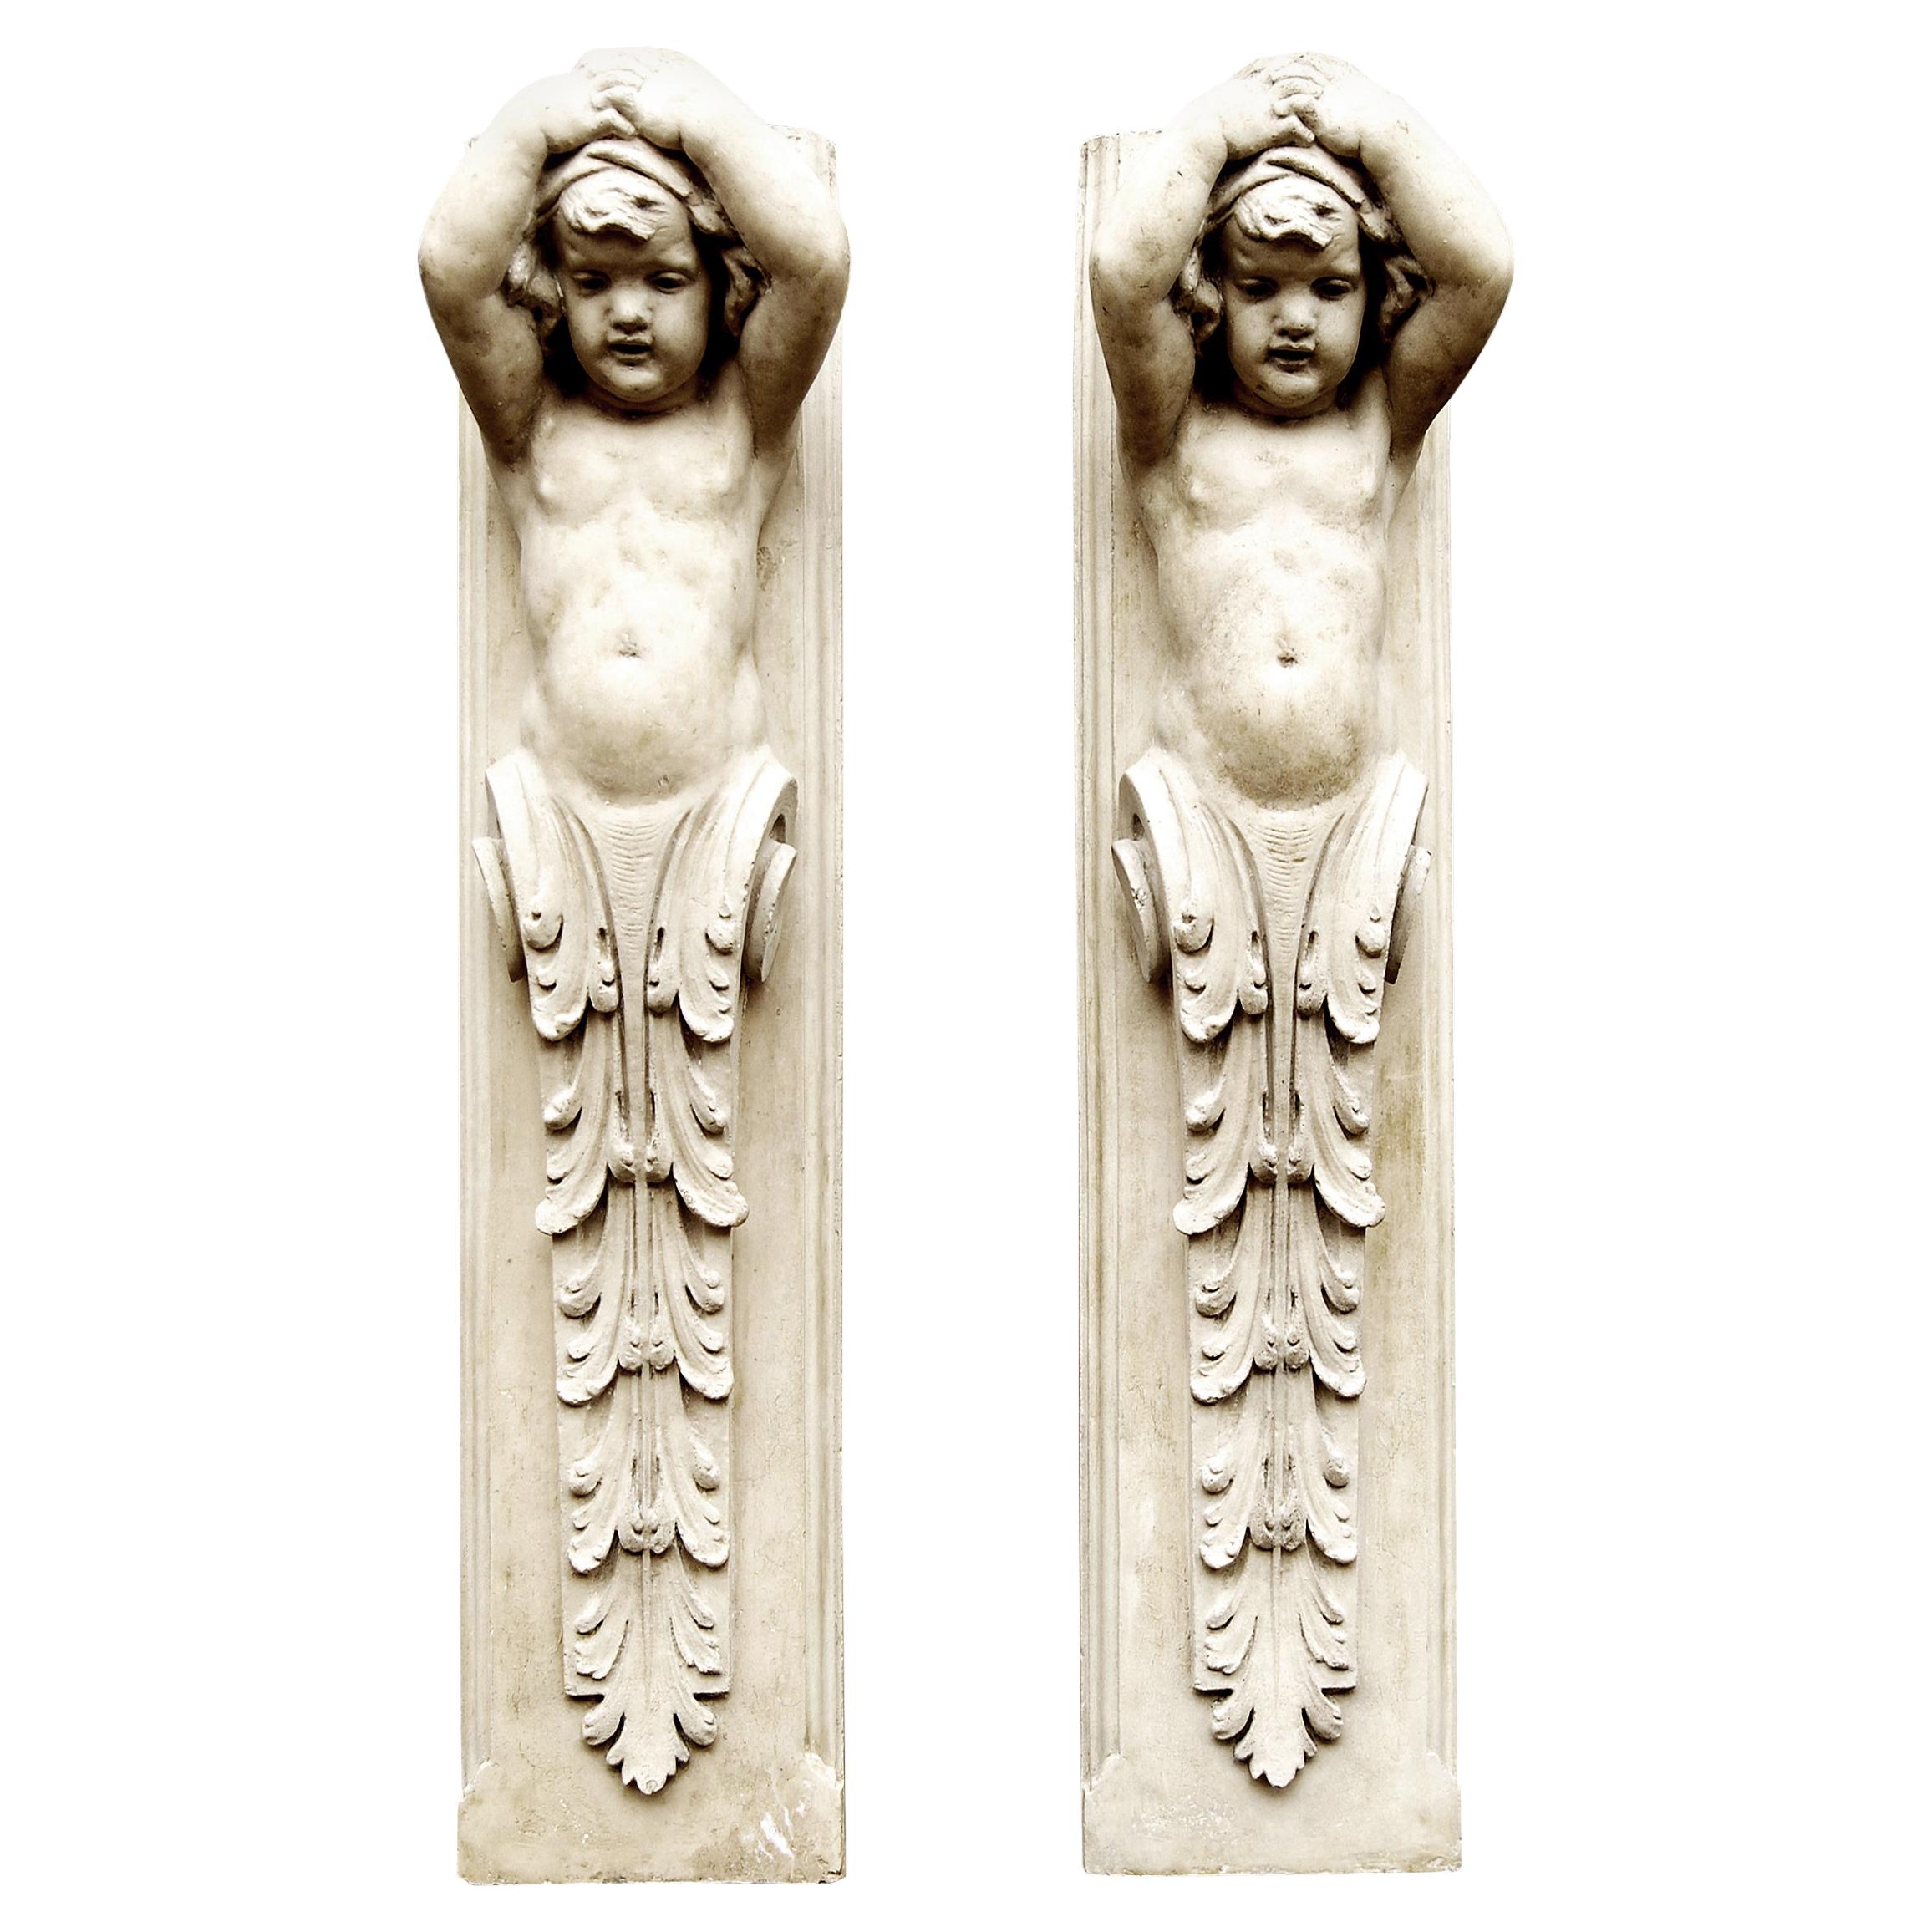 Pair of 19th Century English Glazed Terracotta Figures of Cherubs